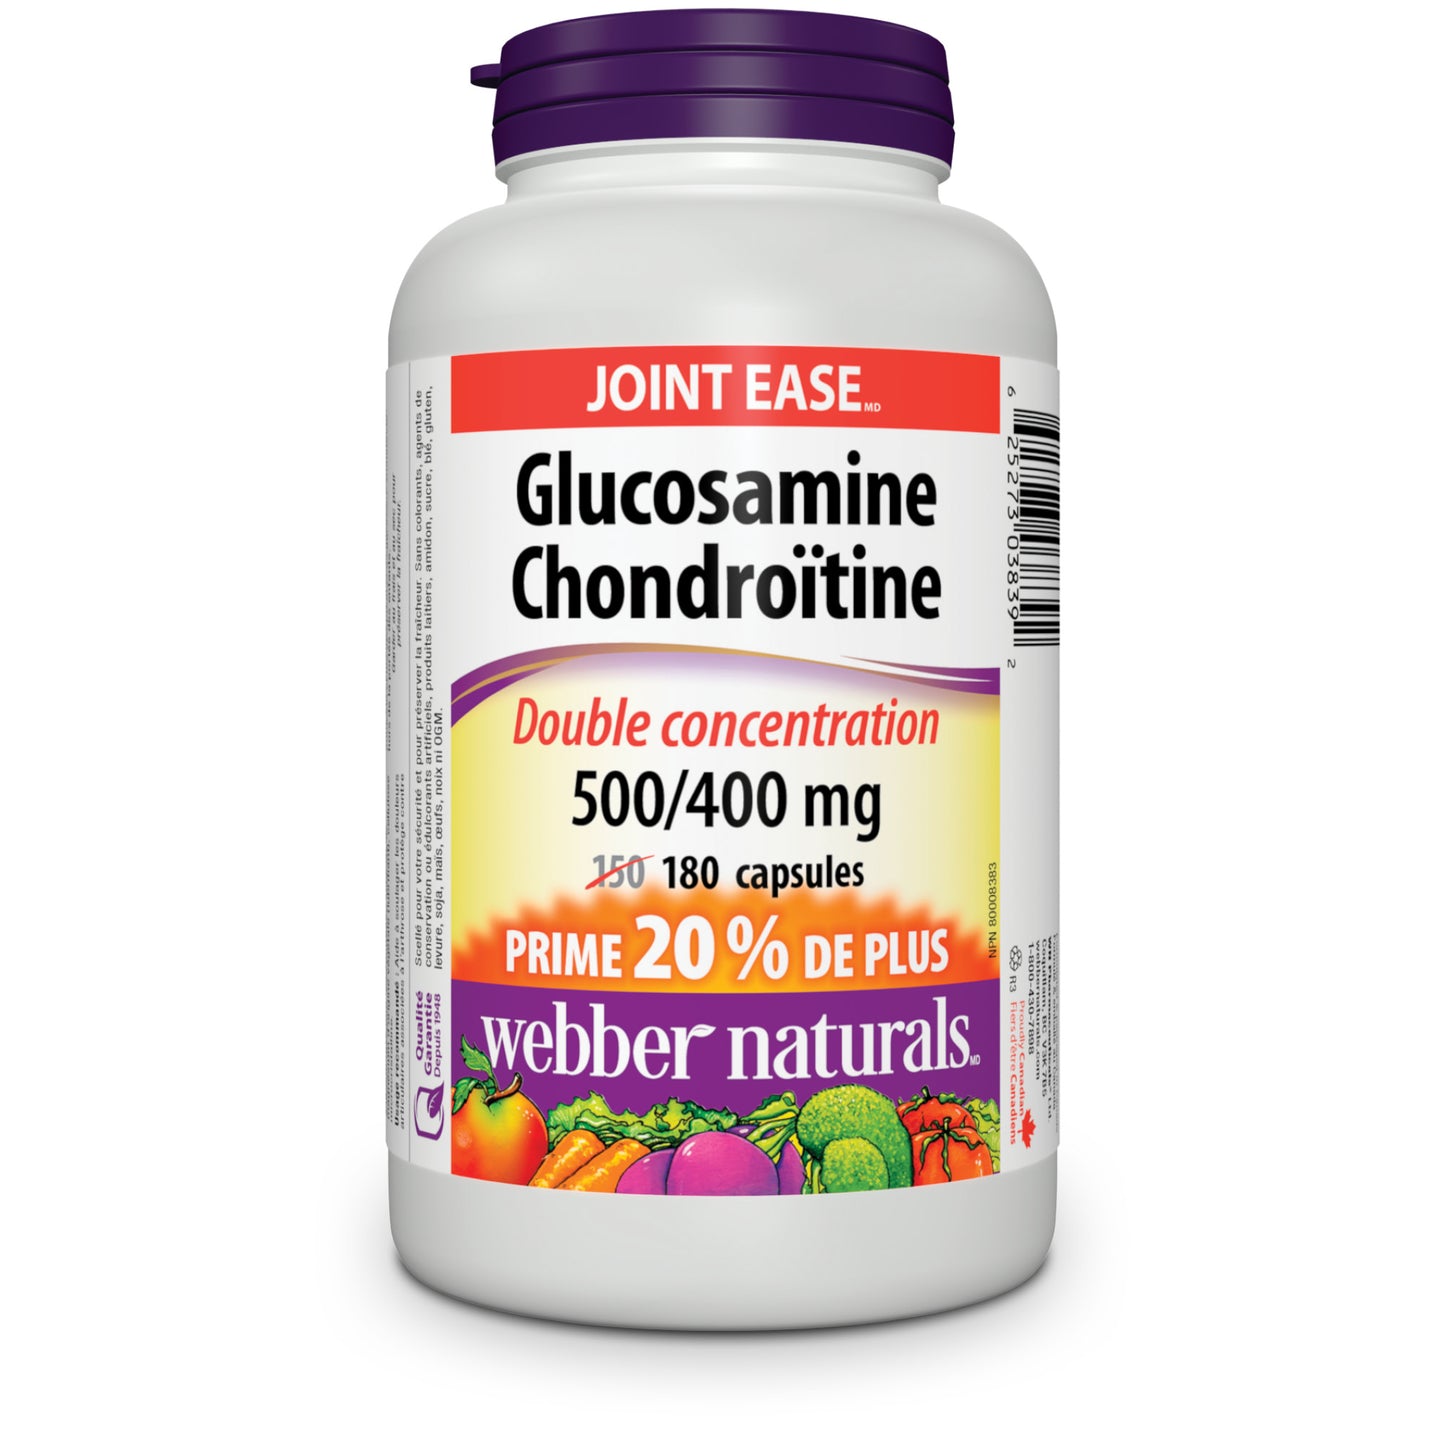 Glucosamine Chondroïtine Double concentration 500/400 mg for Webber Naturals|v|hi-res|WN3839